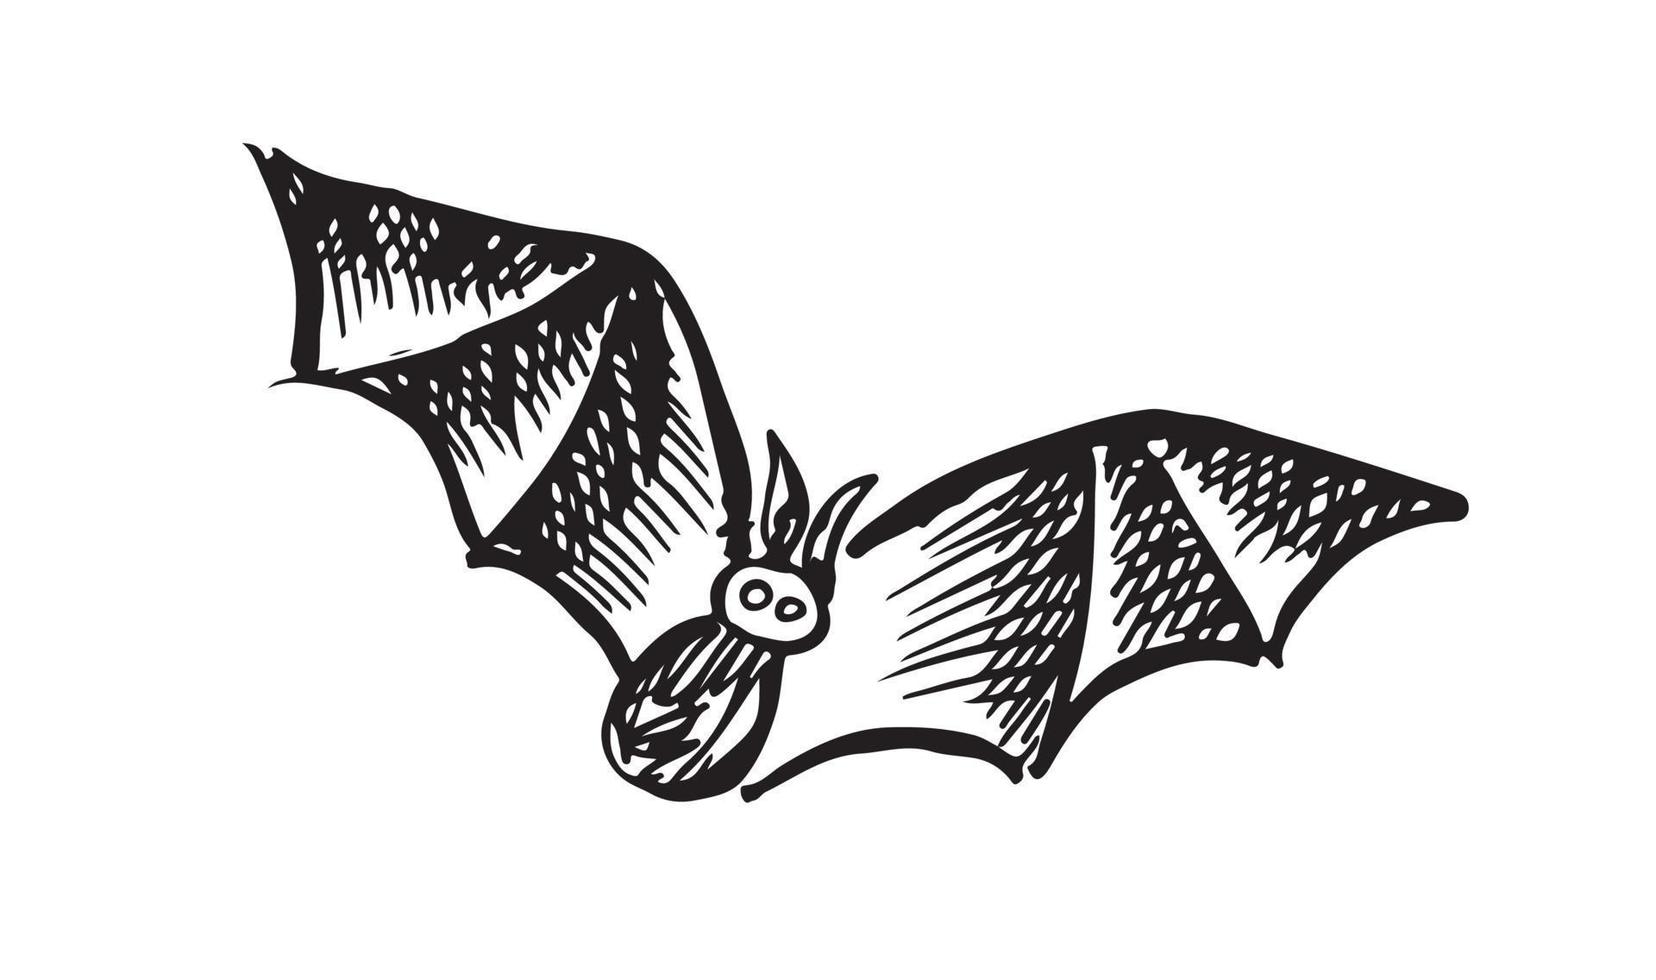 Flying bat, grunge illustration, vector. vector